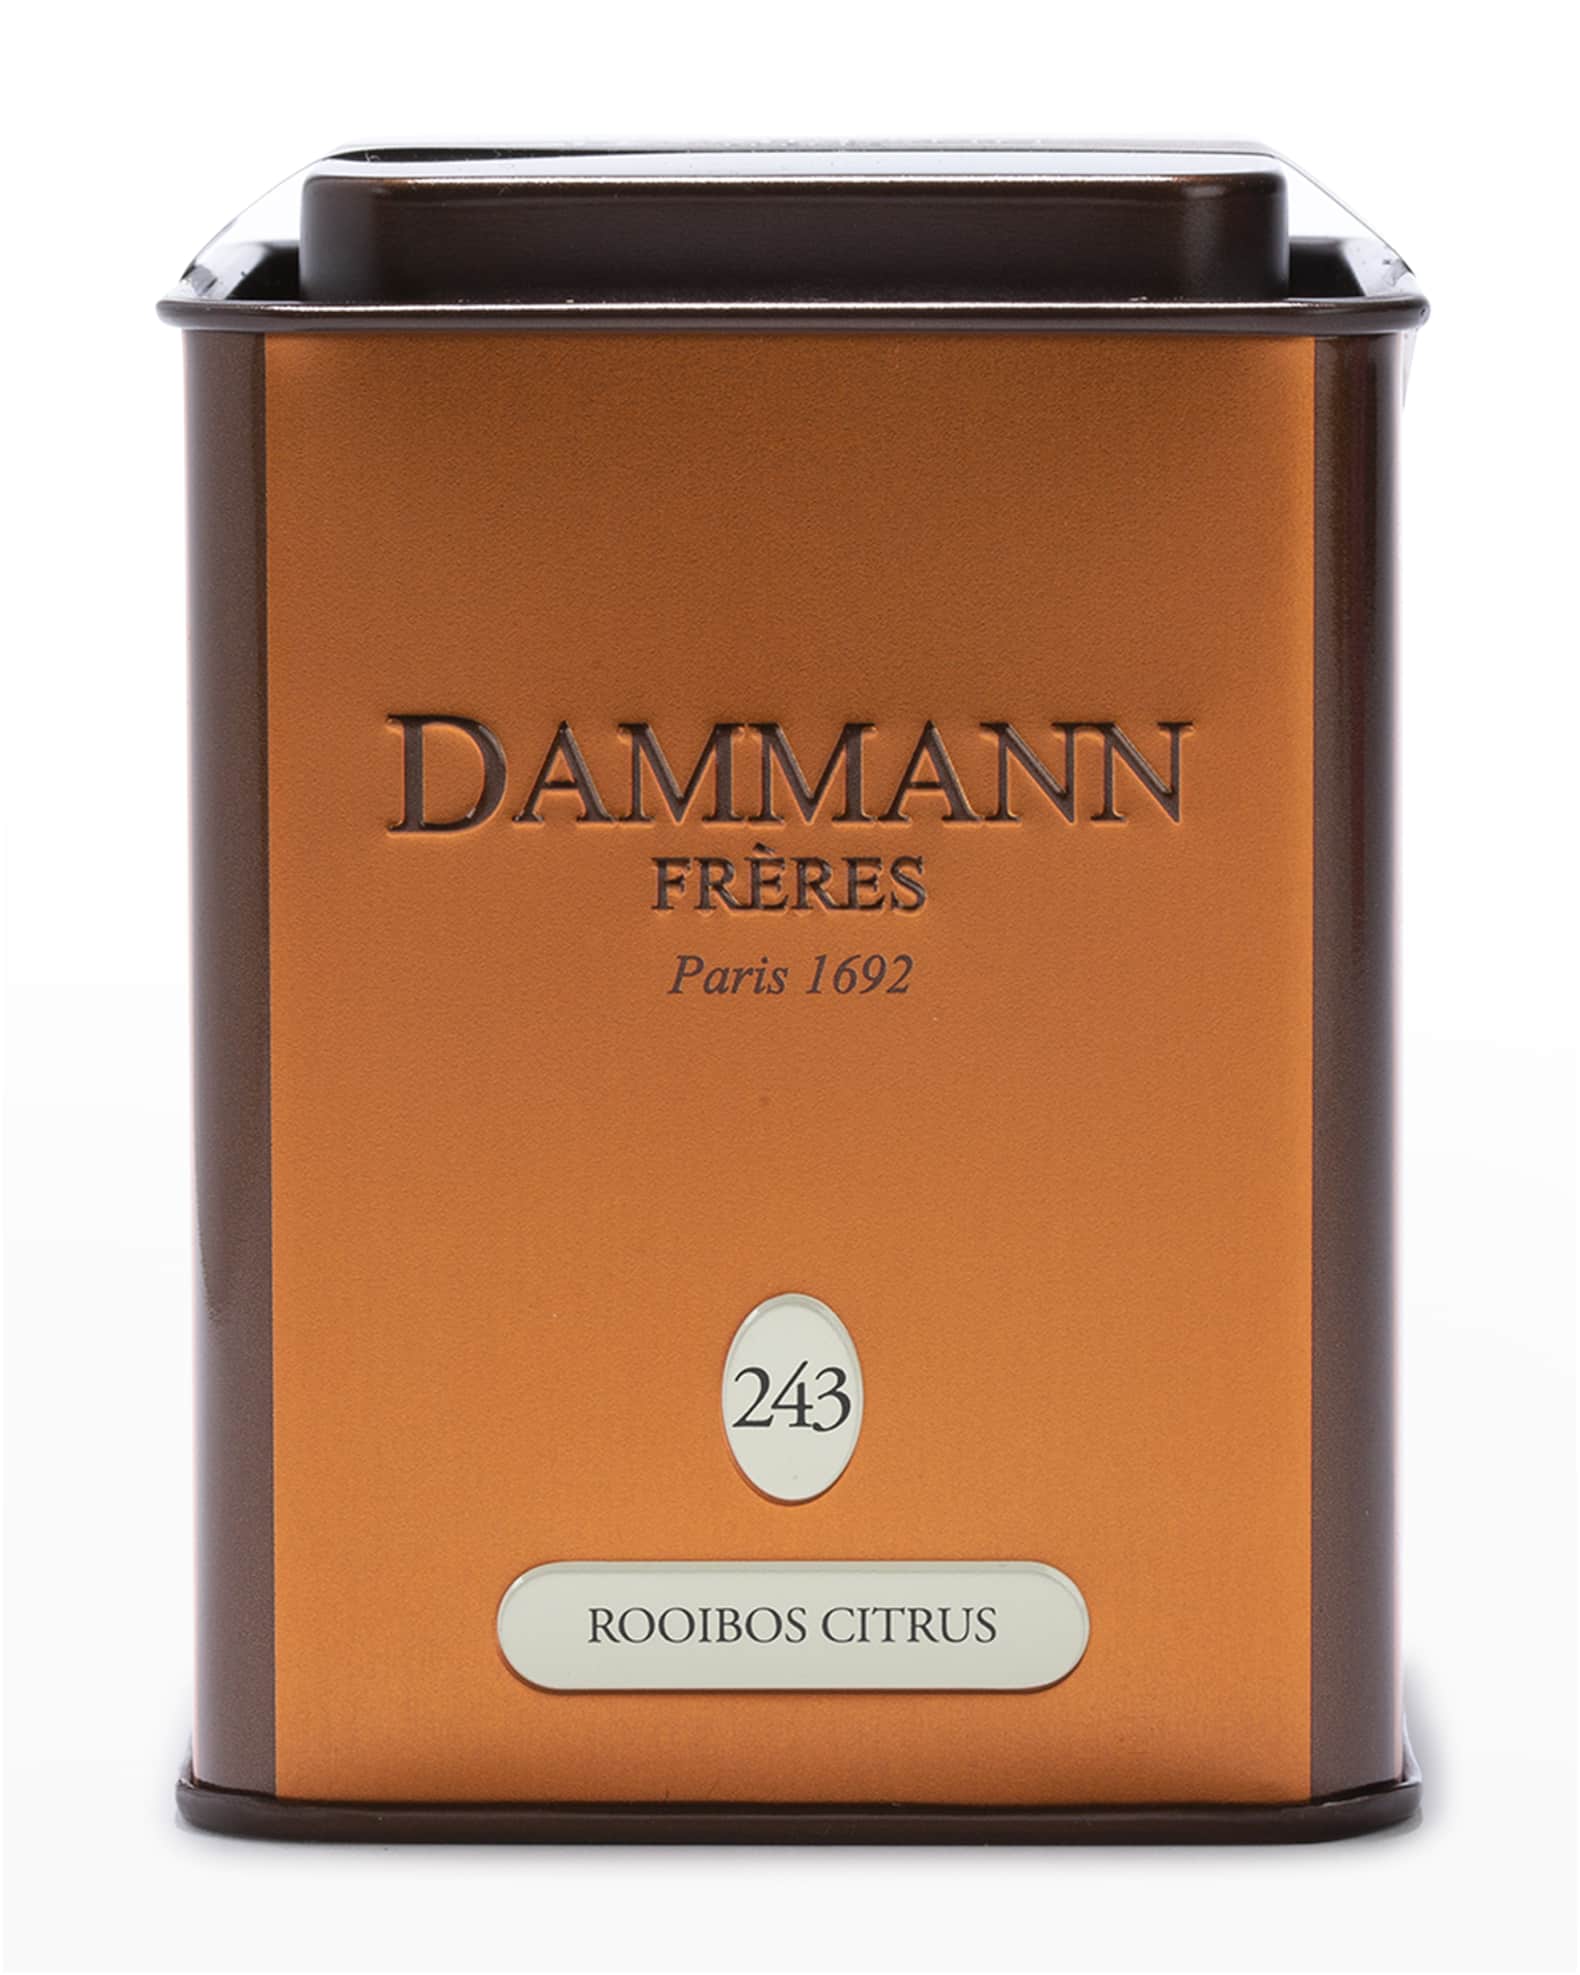 Dammann Freres Sachets, Rooibos Citrus Tea Bags 2 Pack, Premium